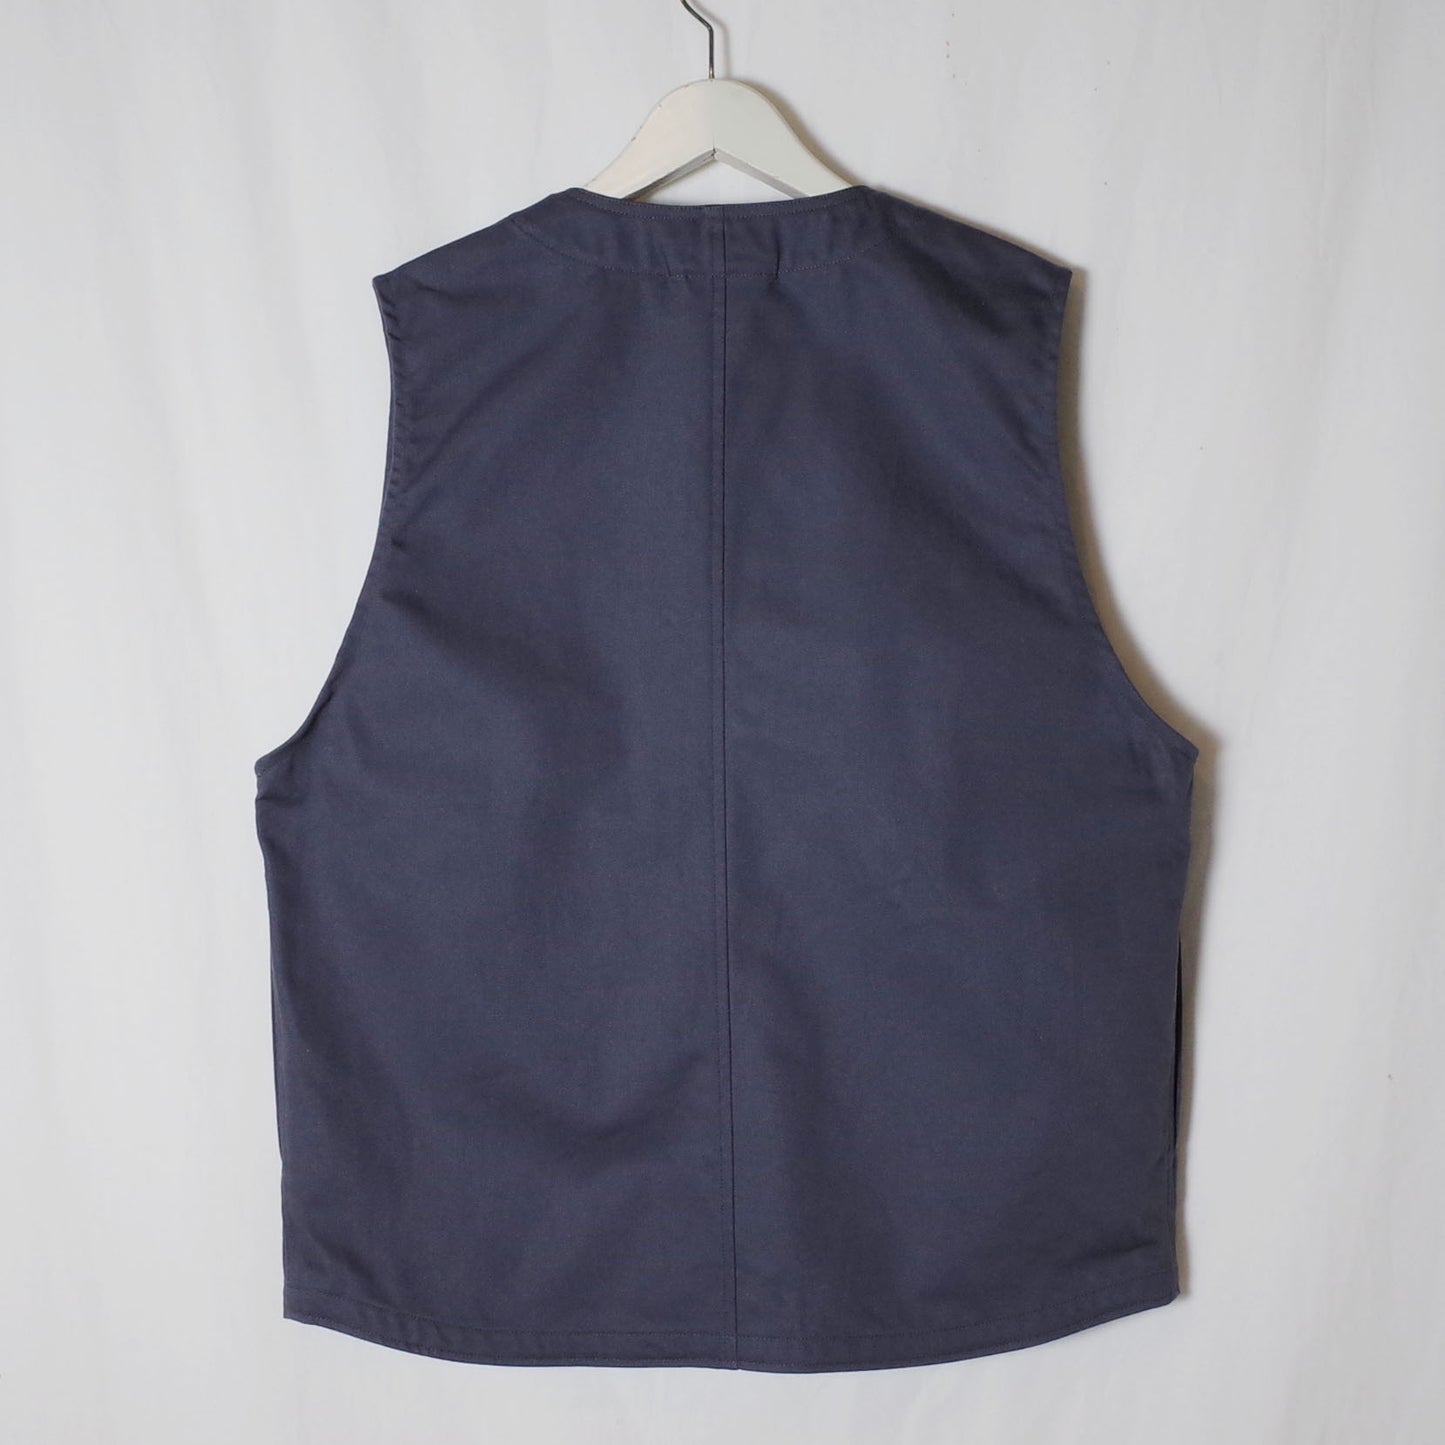 SANDINISTA "Vintage Vest" / サンディニスタ "ヴィンテージベスト"